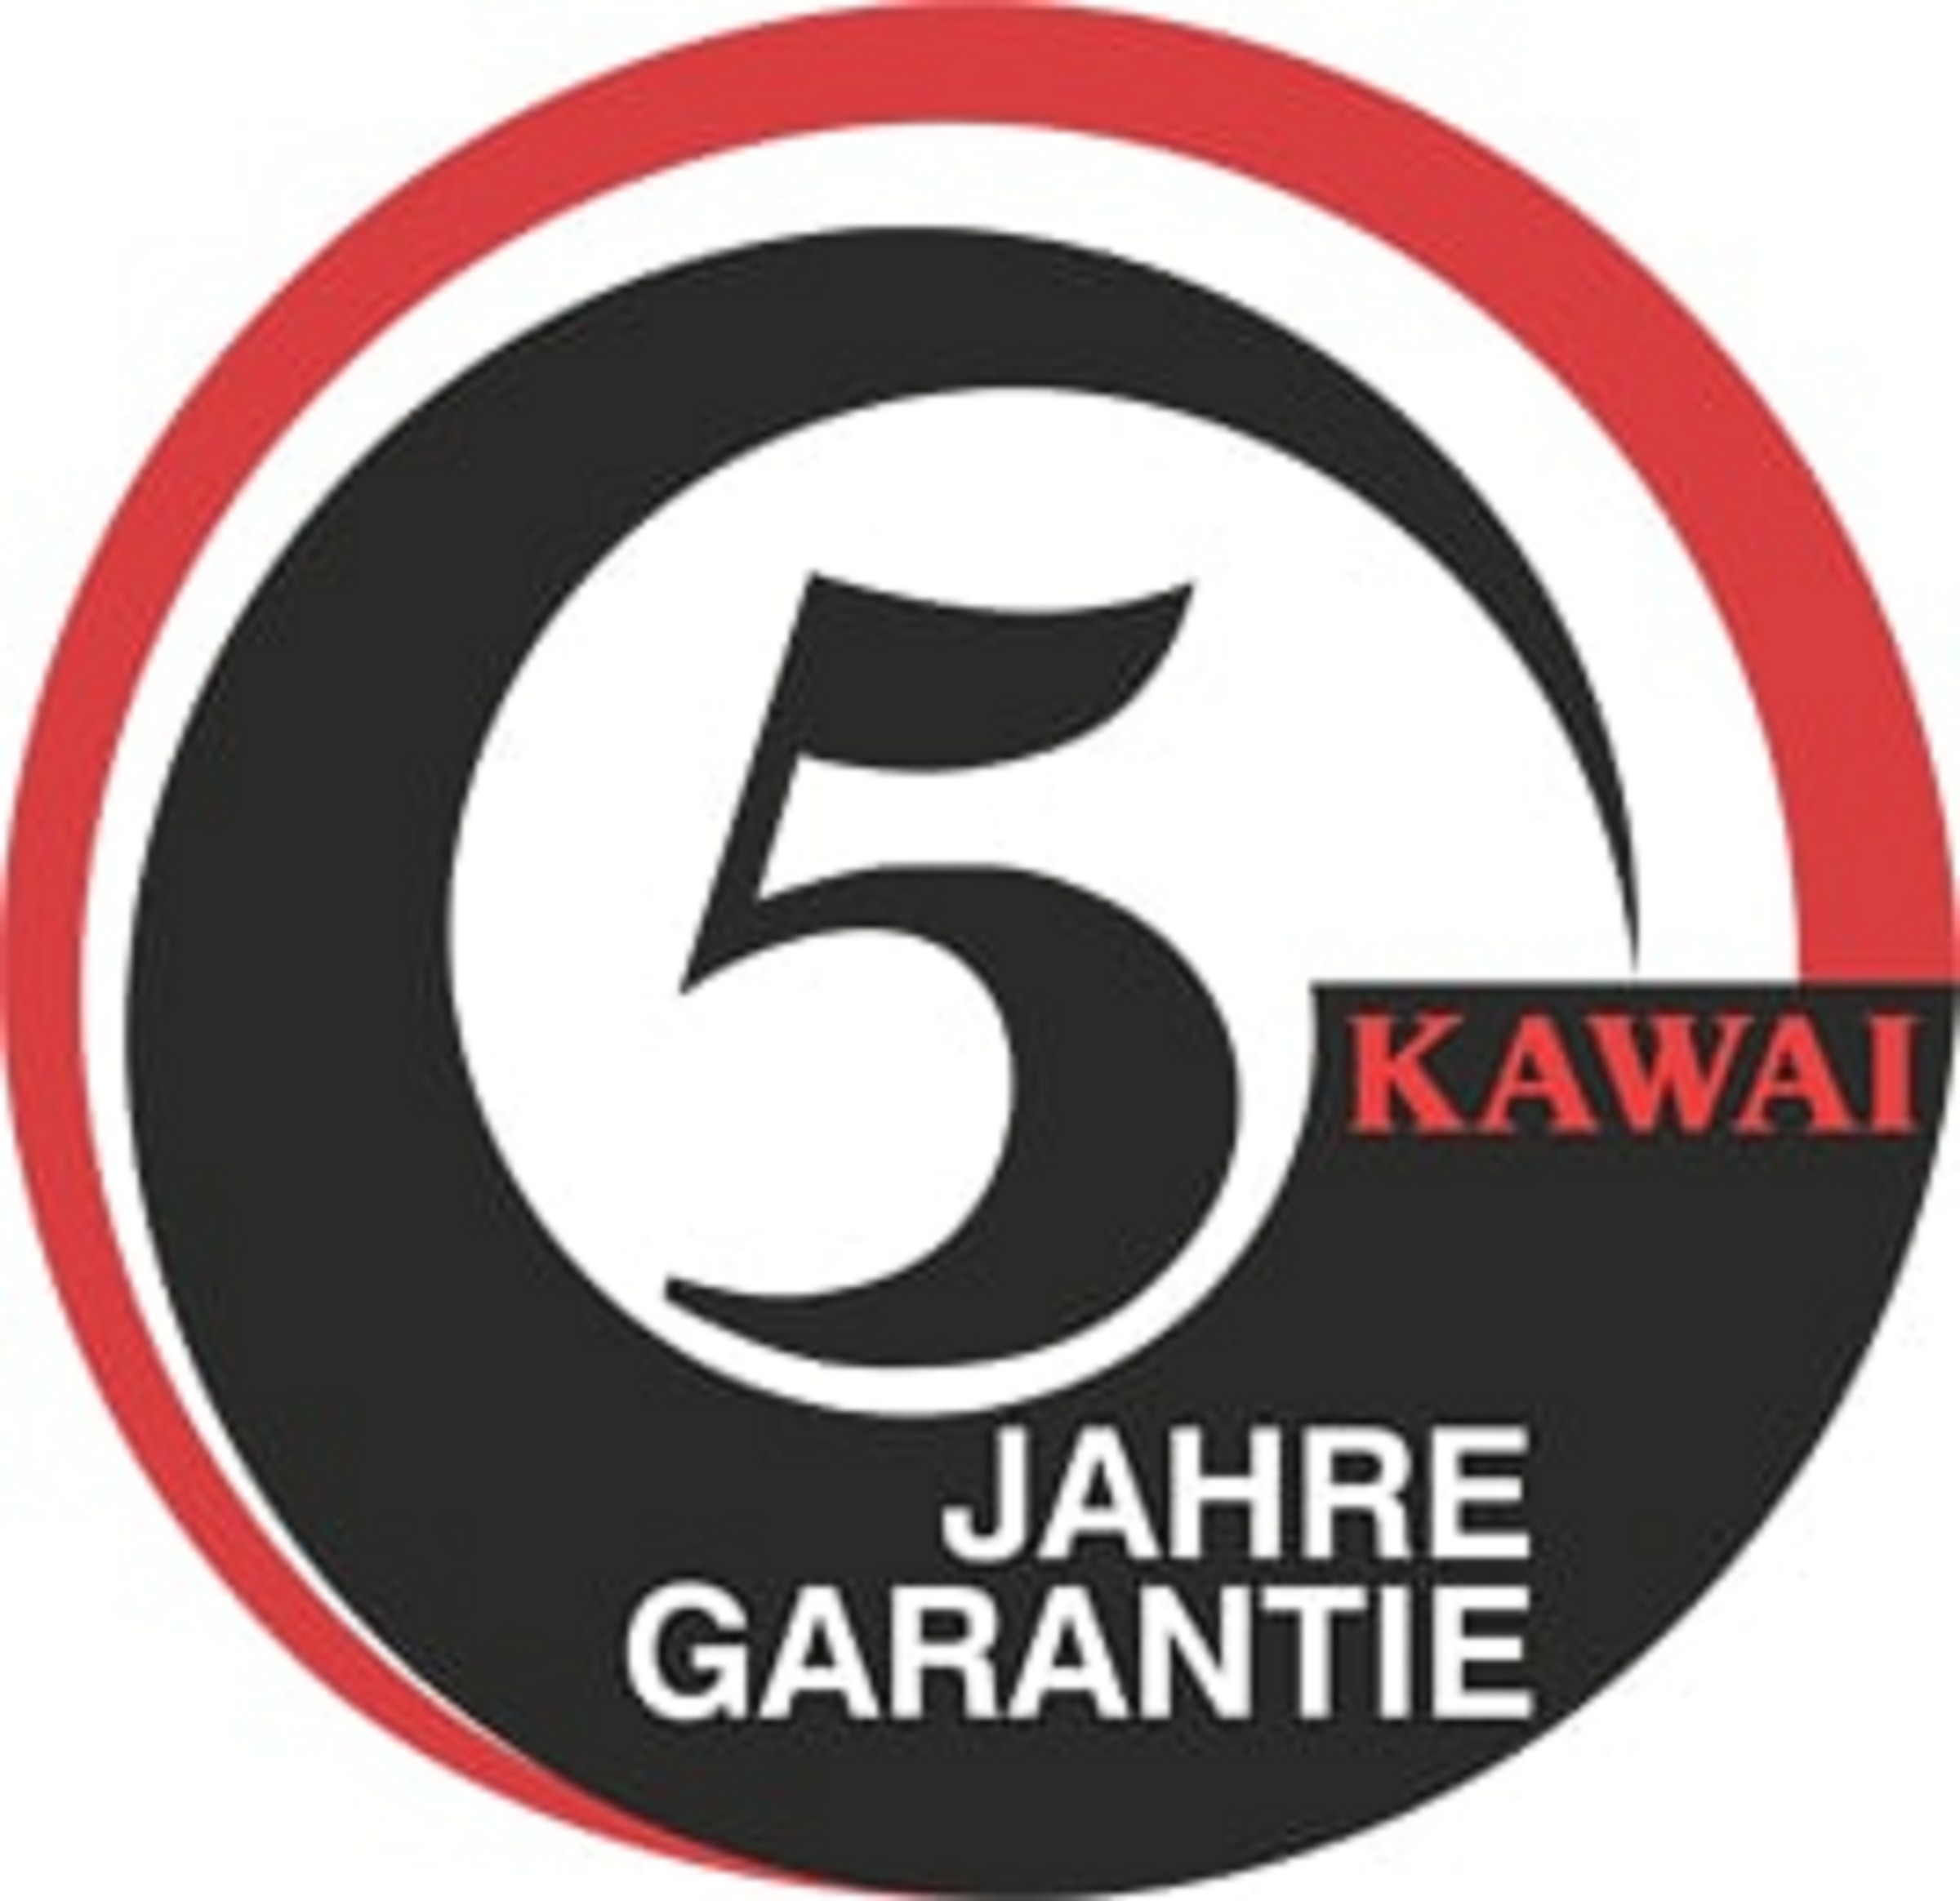 Kawai K 500 e/p 130 cm schwarz hochglanz